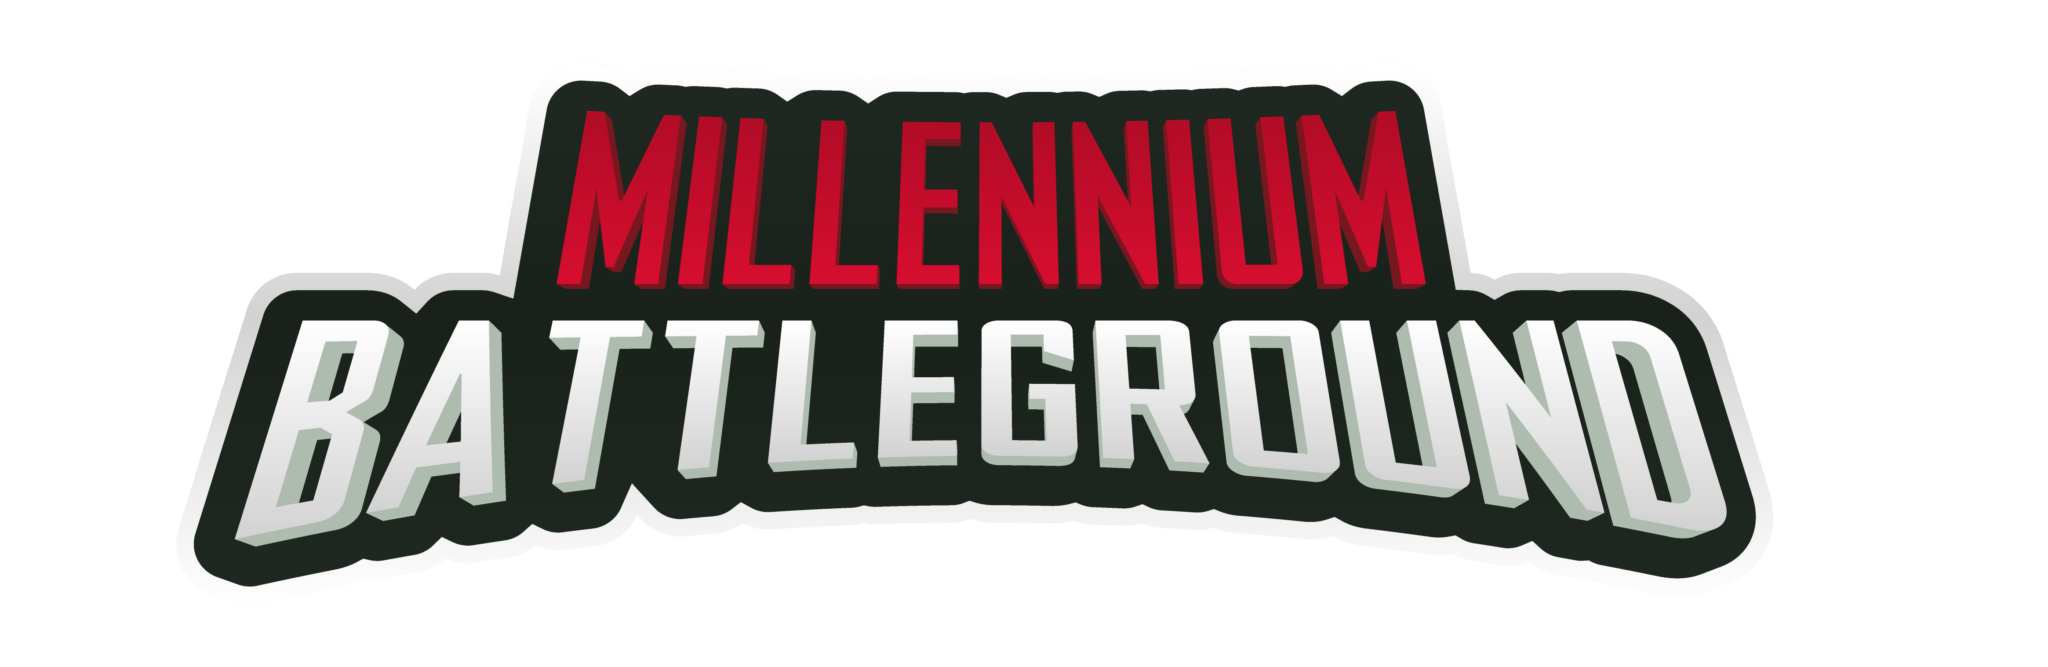 Logo_MillenniumBattelground.png